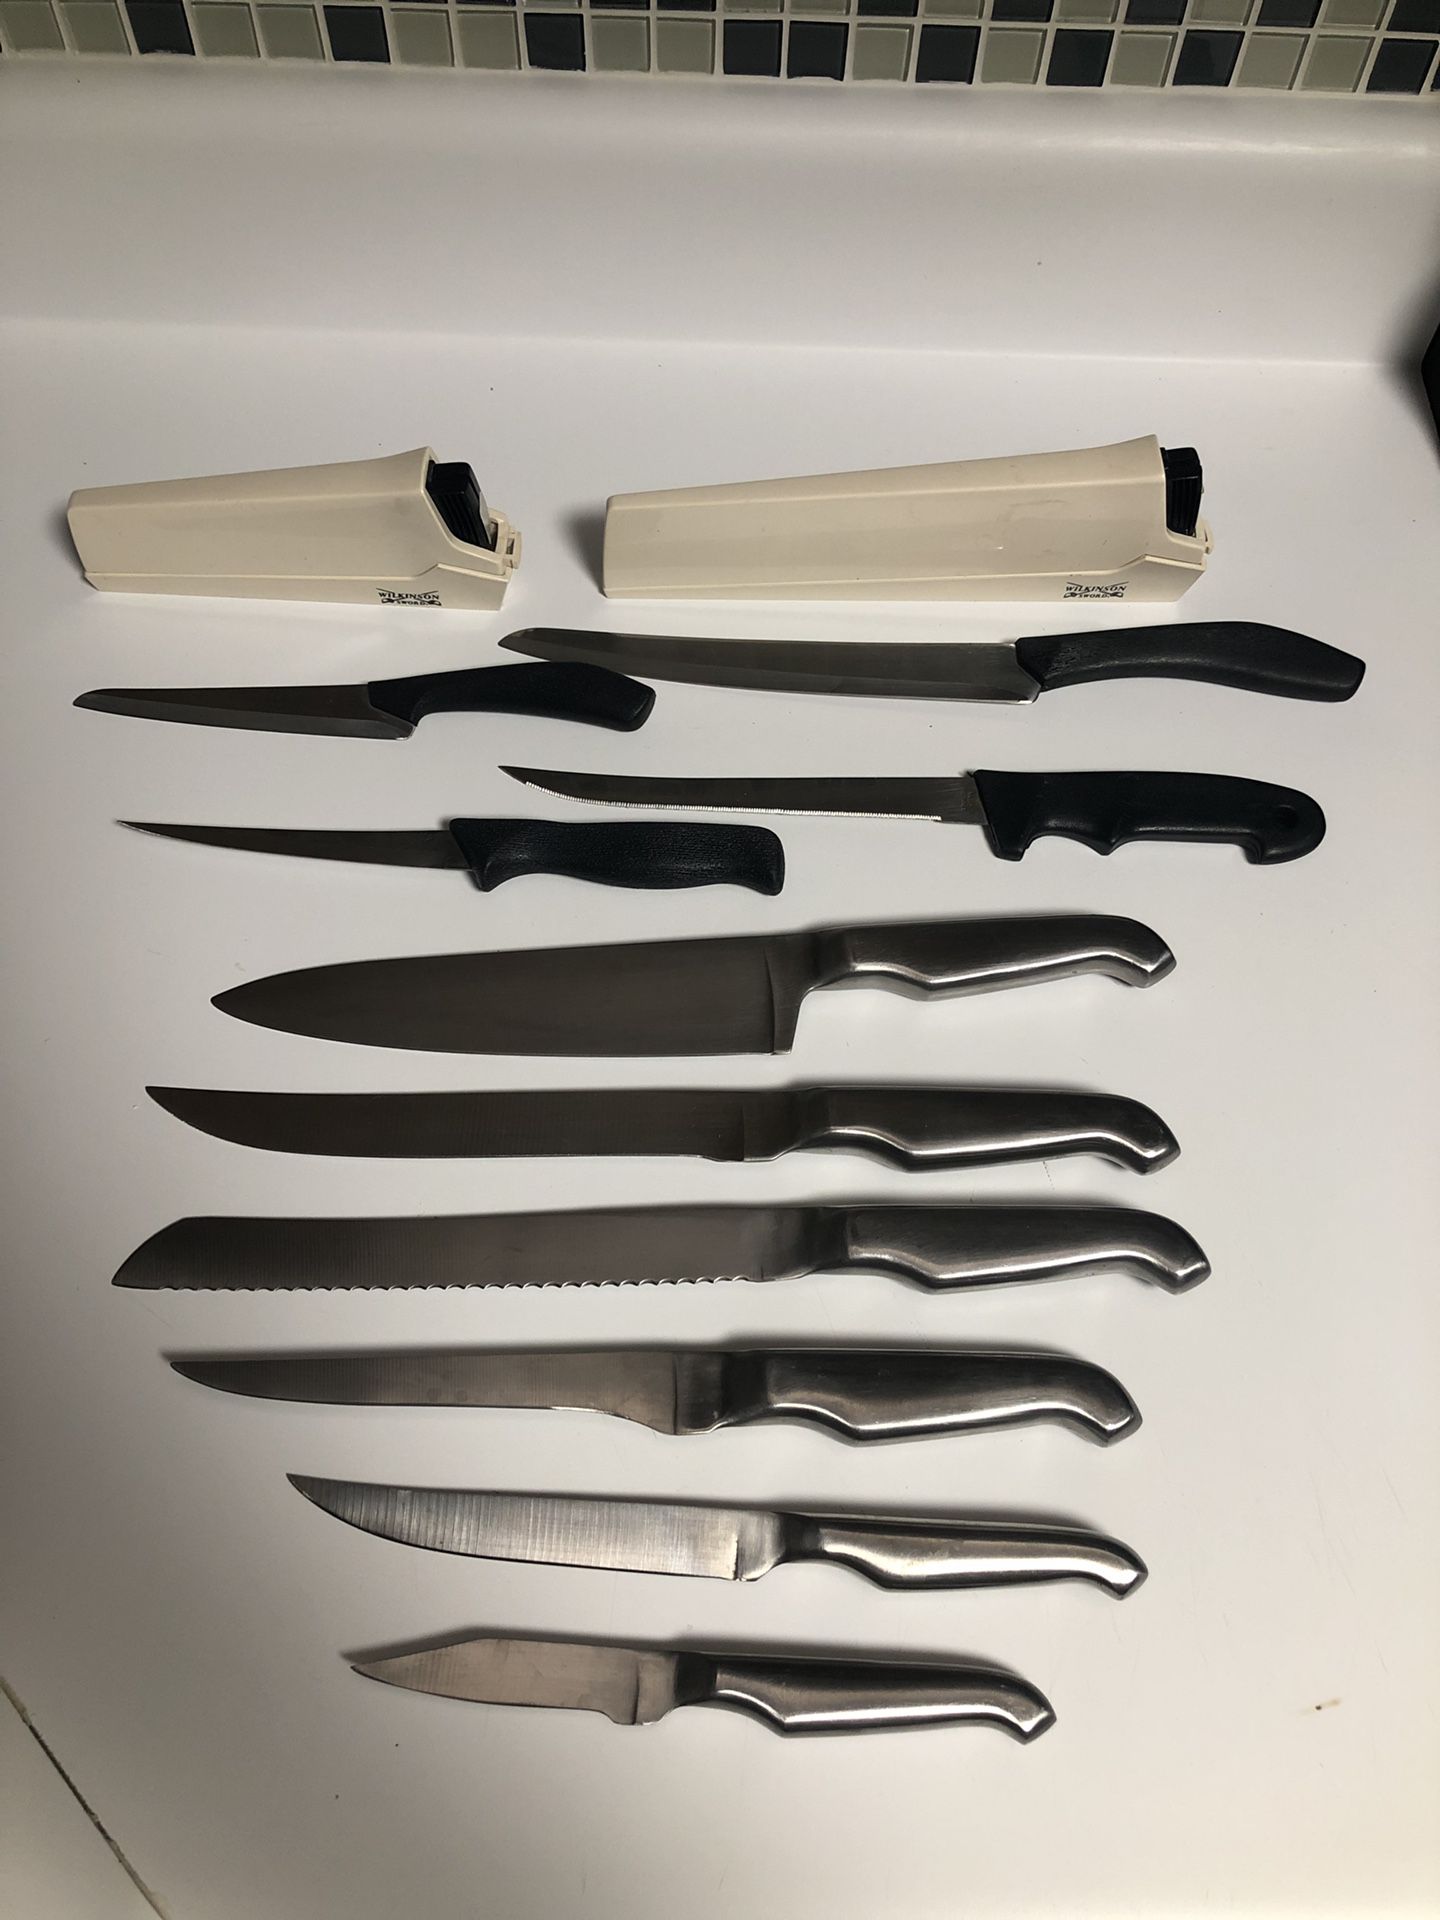 Cutlery set